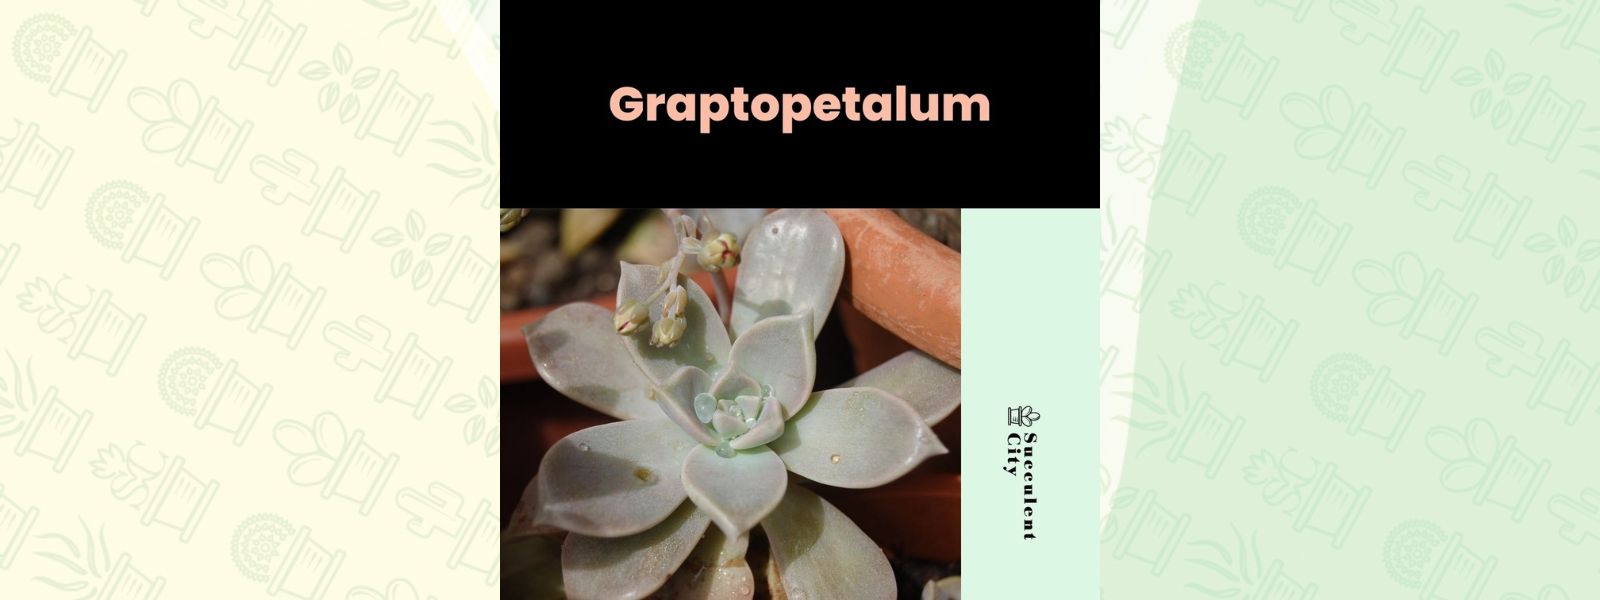 Género “Graptopetalum”.